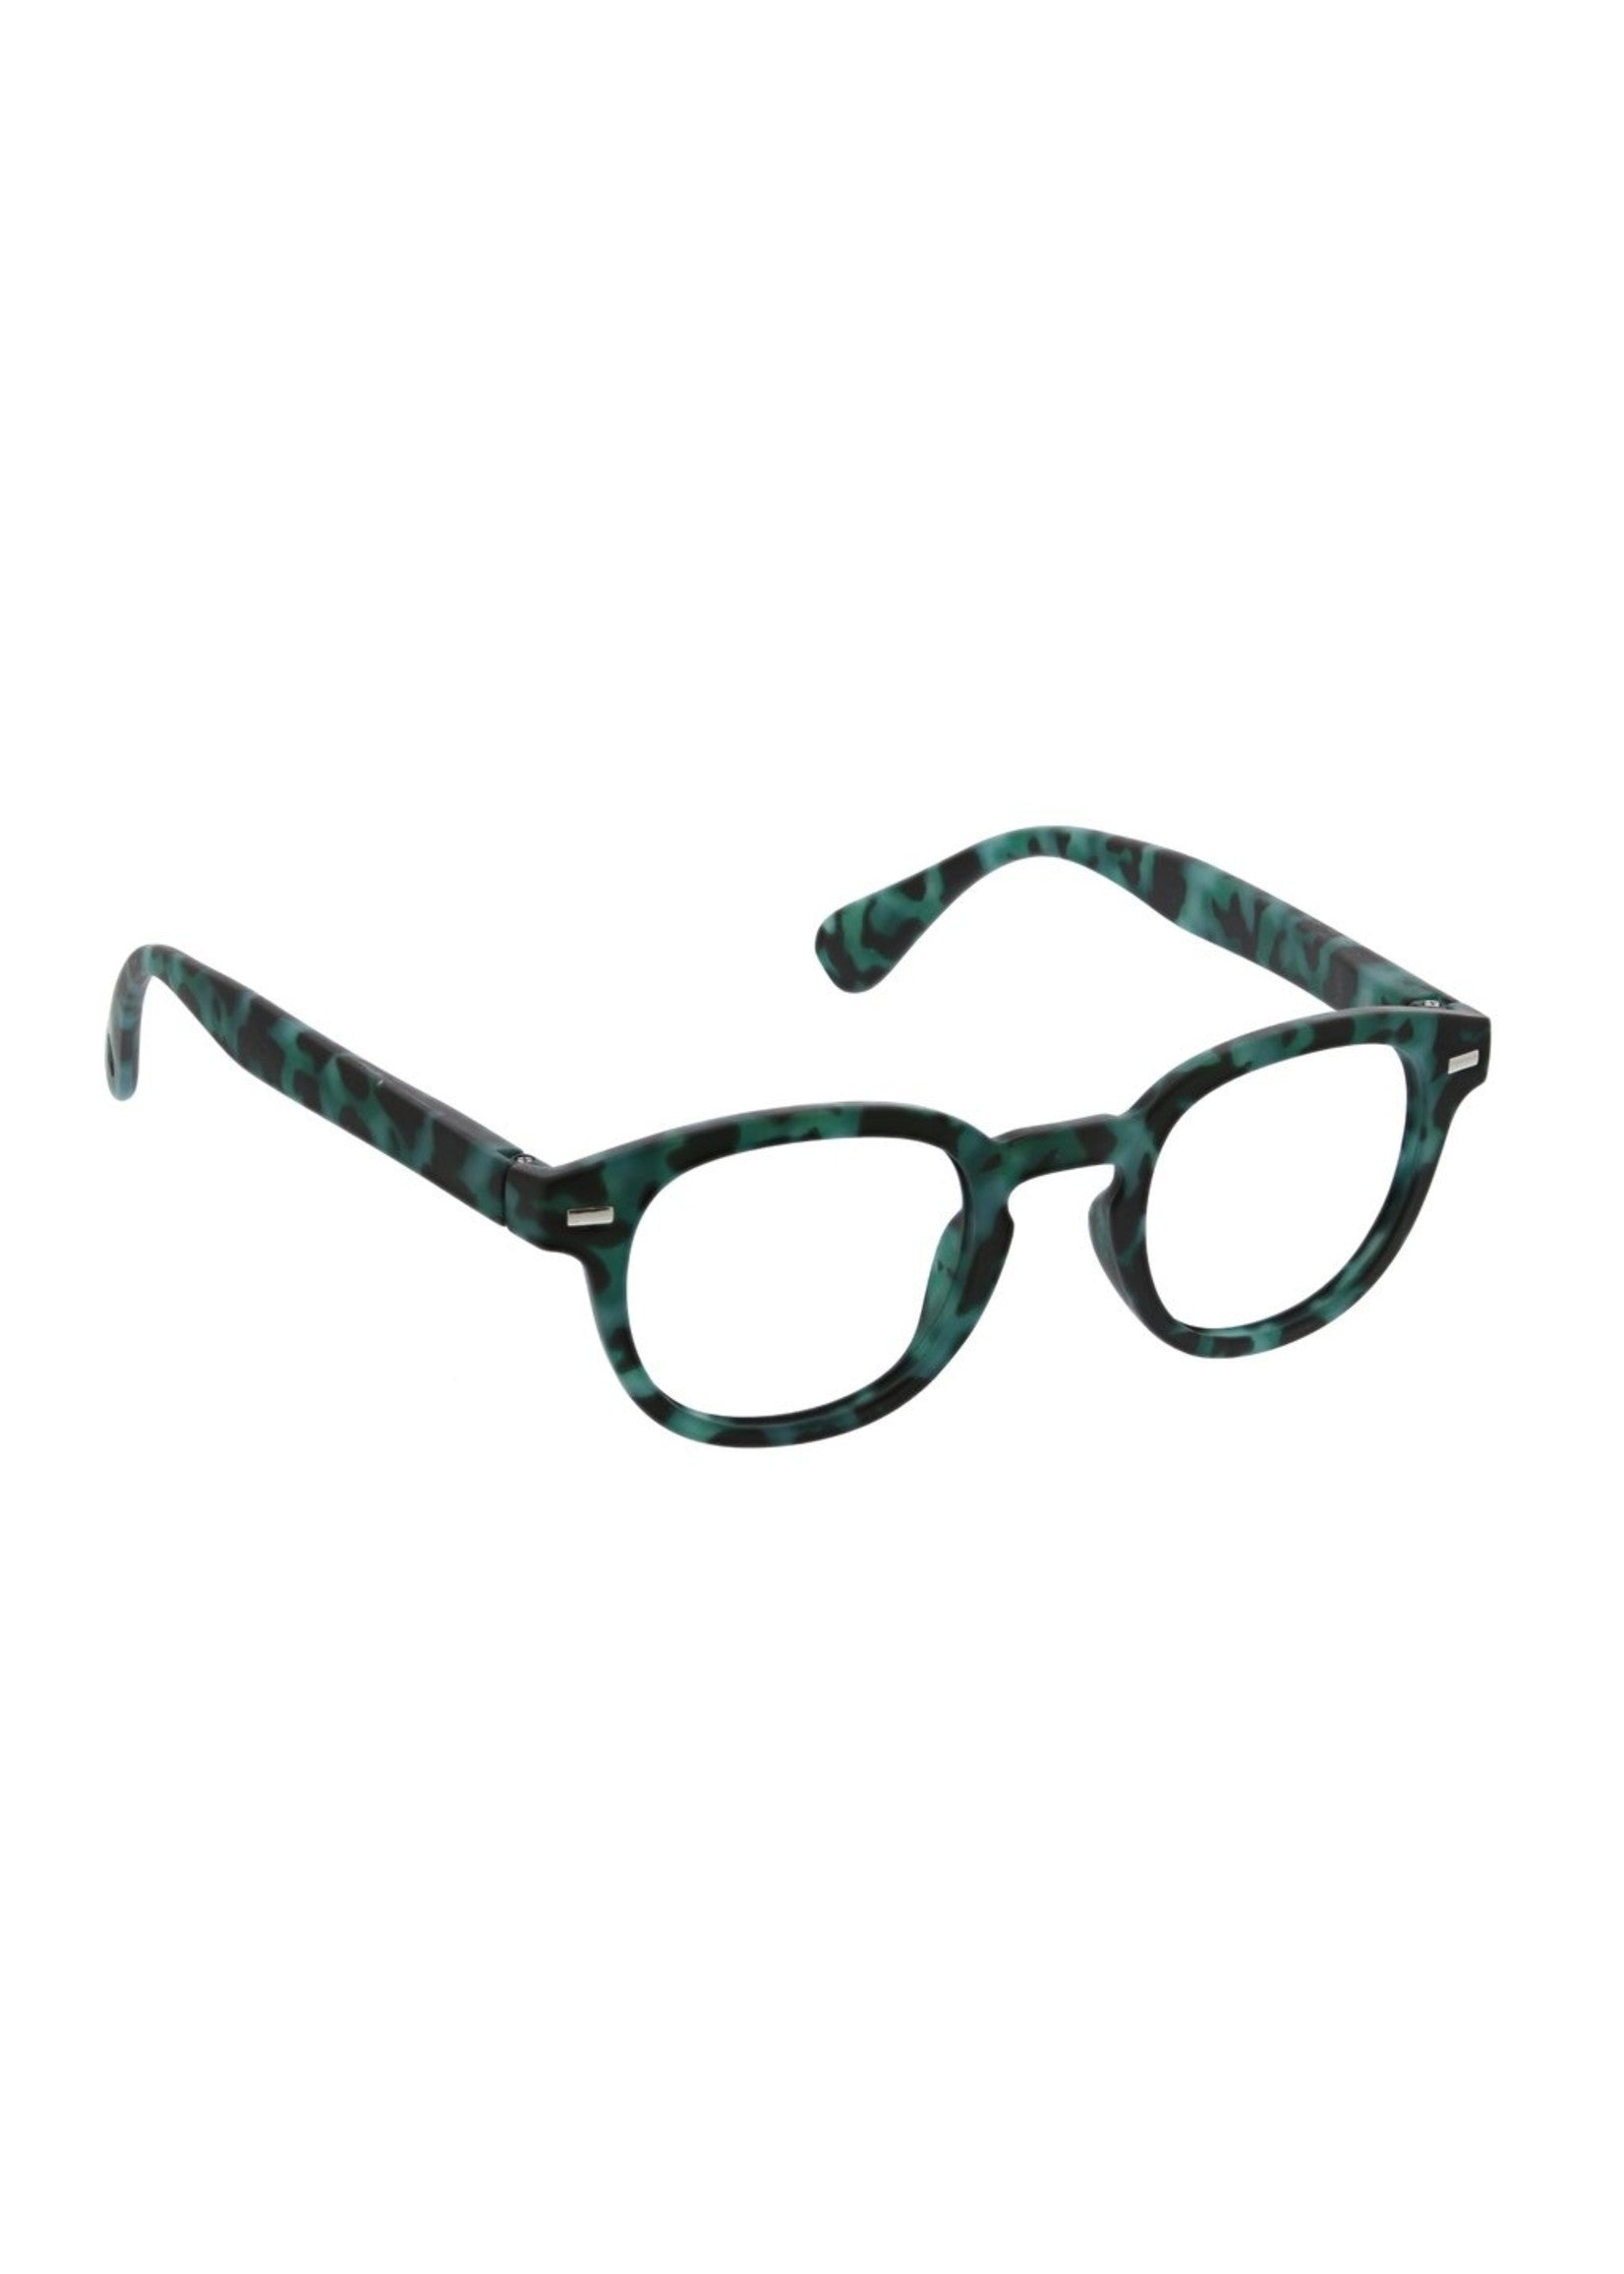 Headliner Focus Green Tortoise - Peepers Reading Glasses